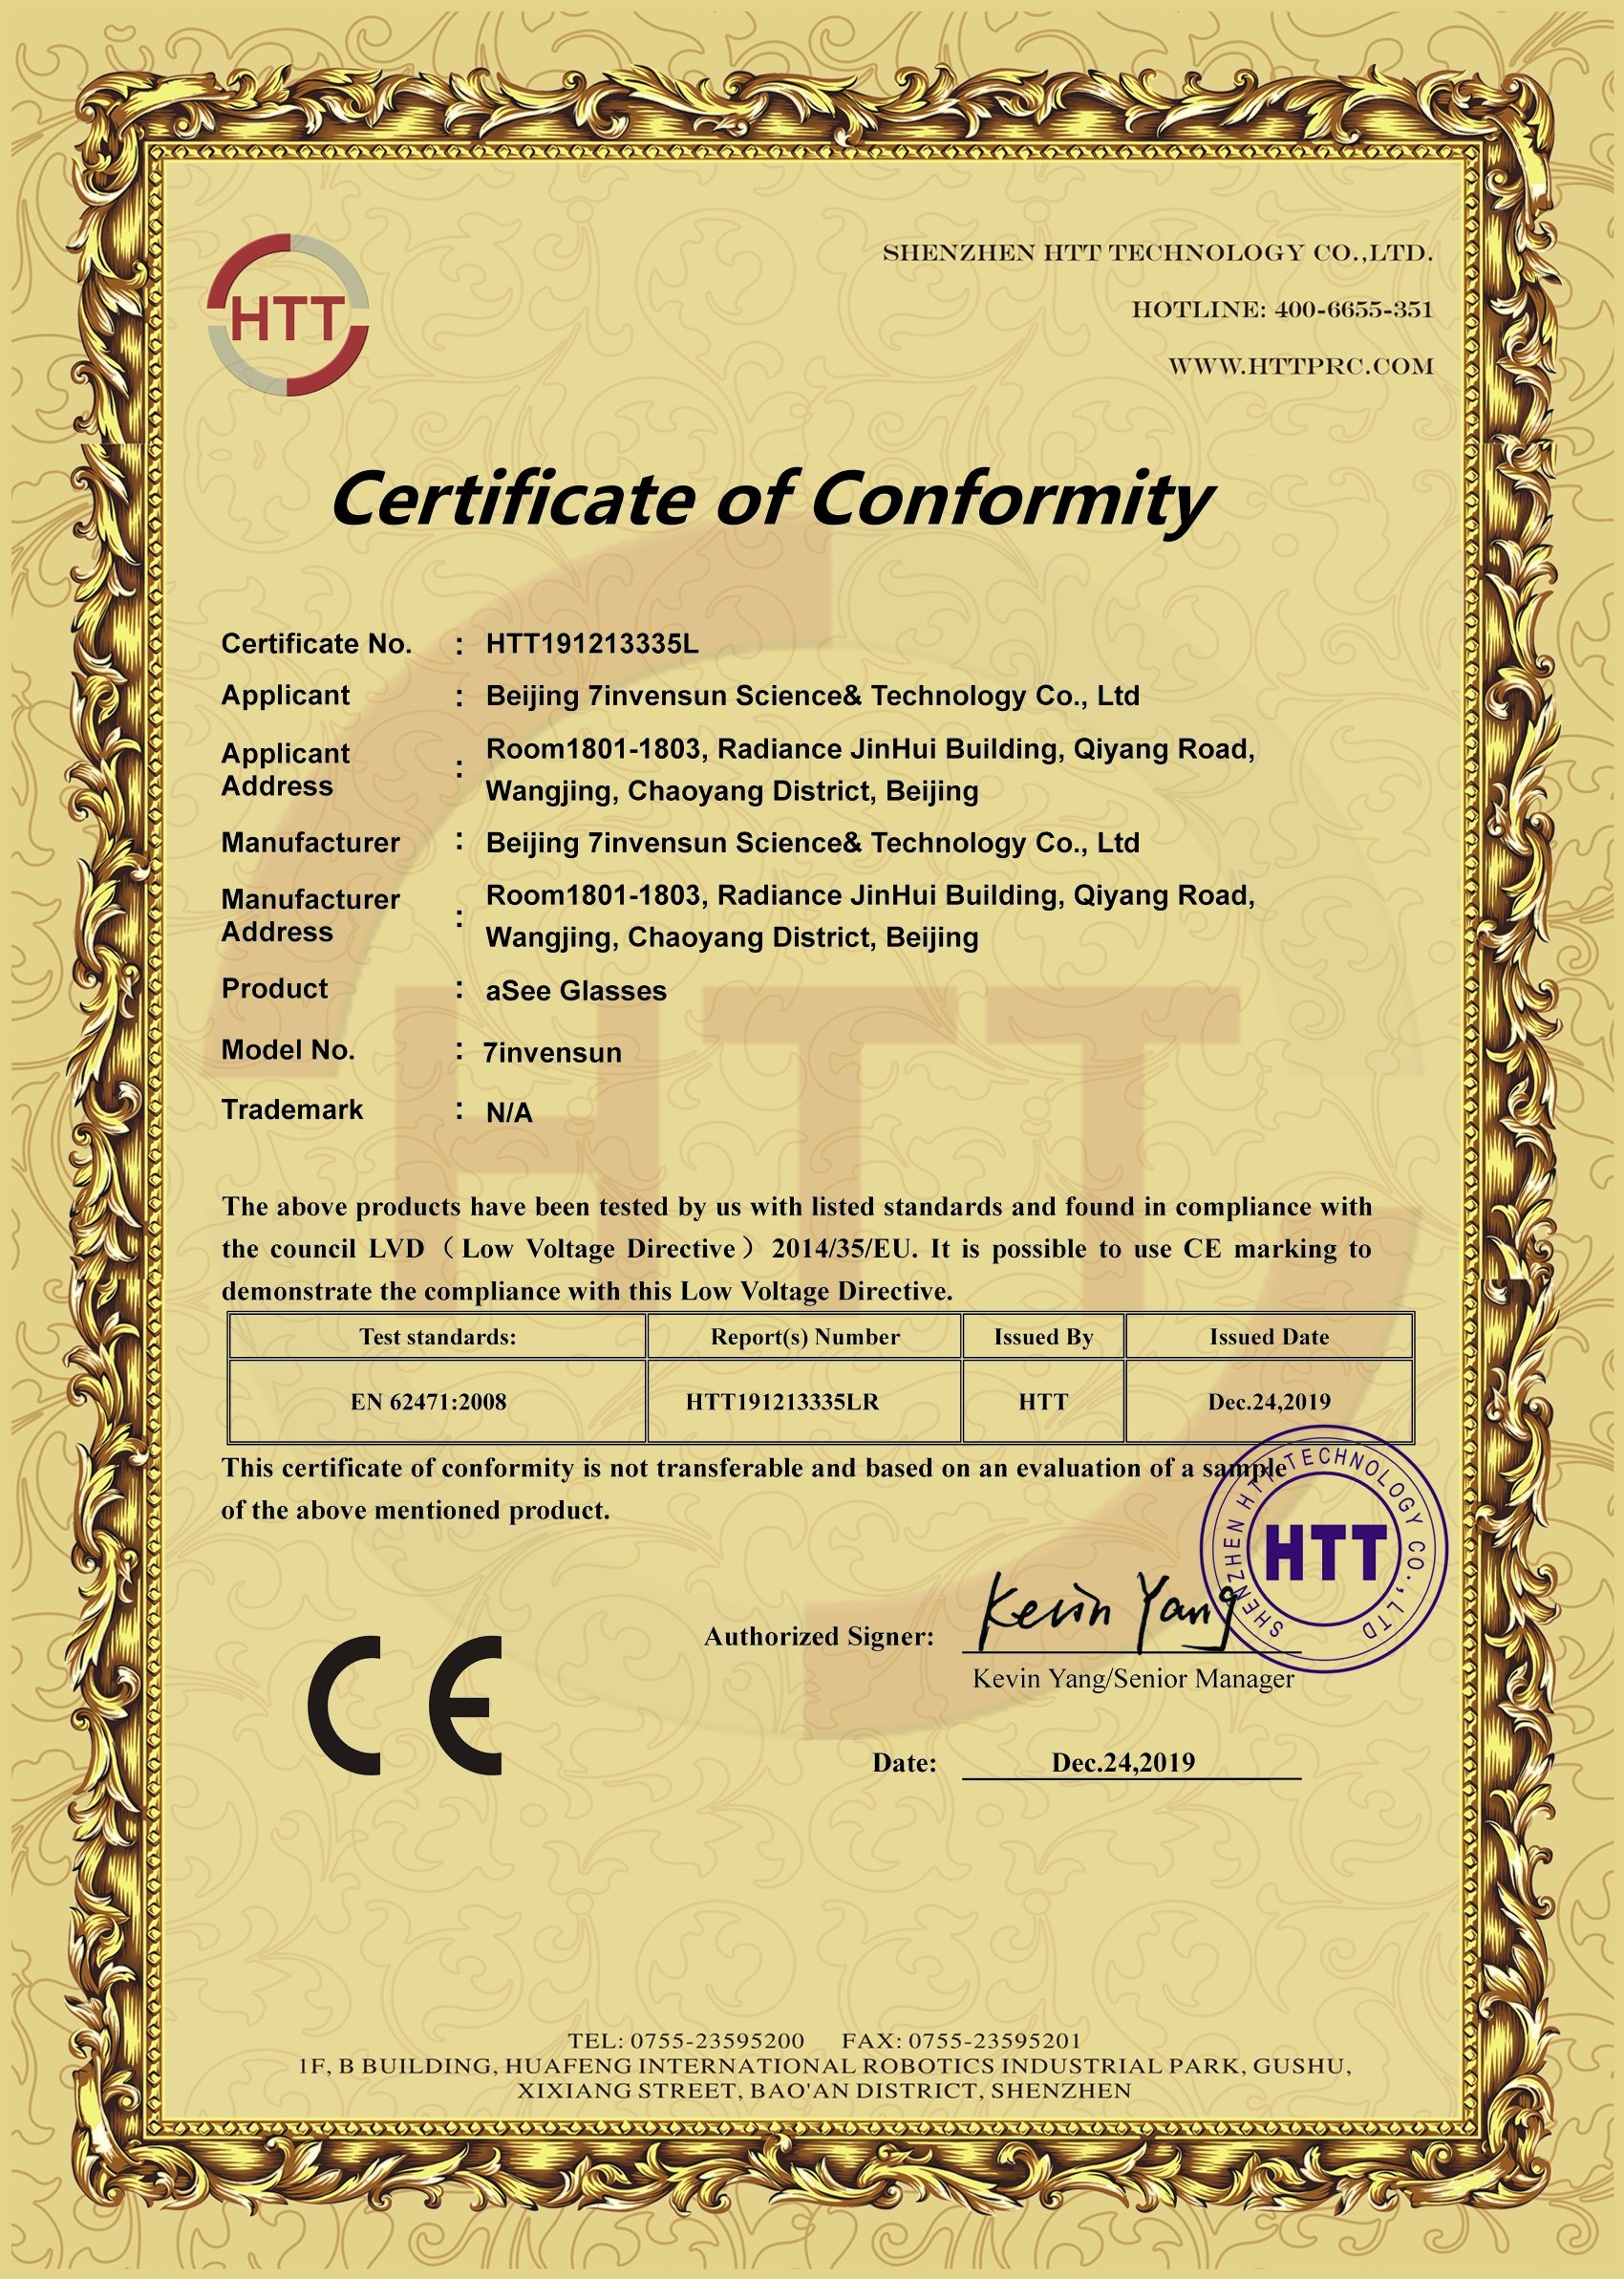 Beijing 7invensun Technology Co., Ltd. Certifications